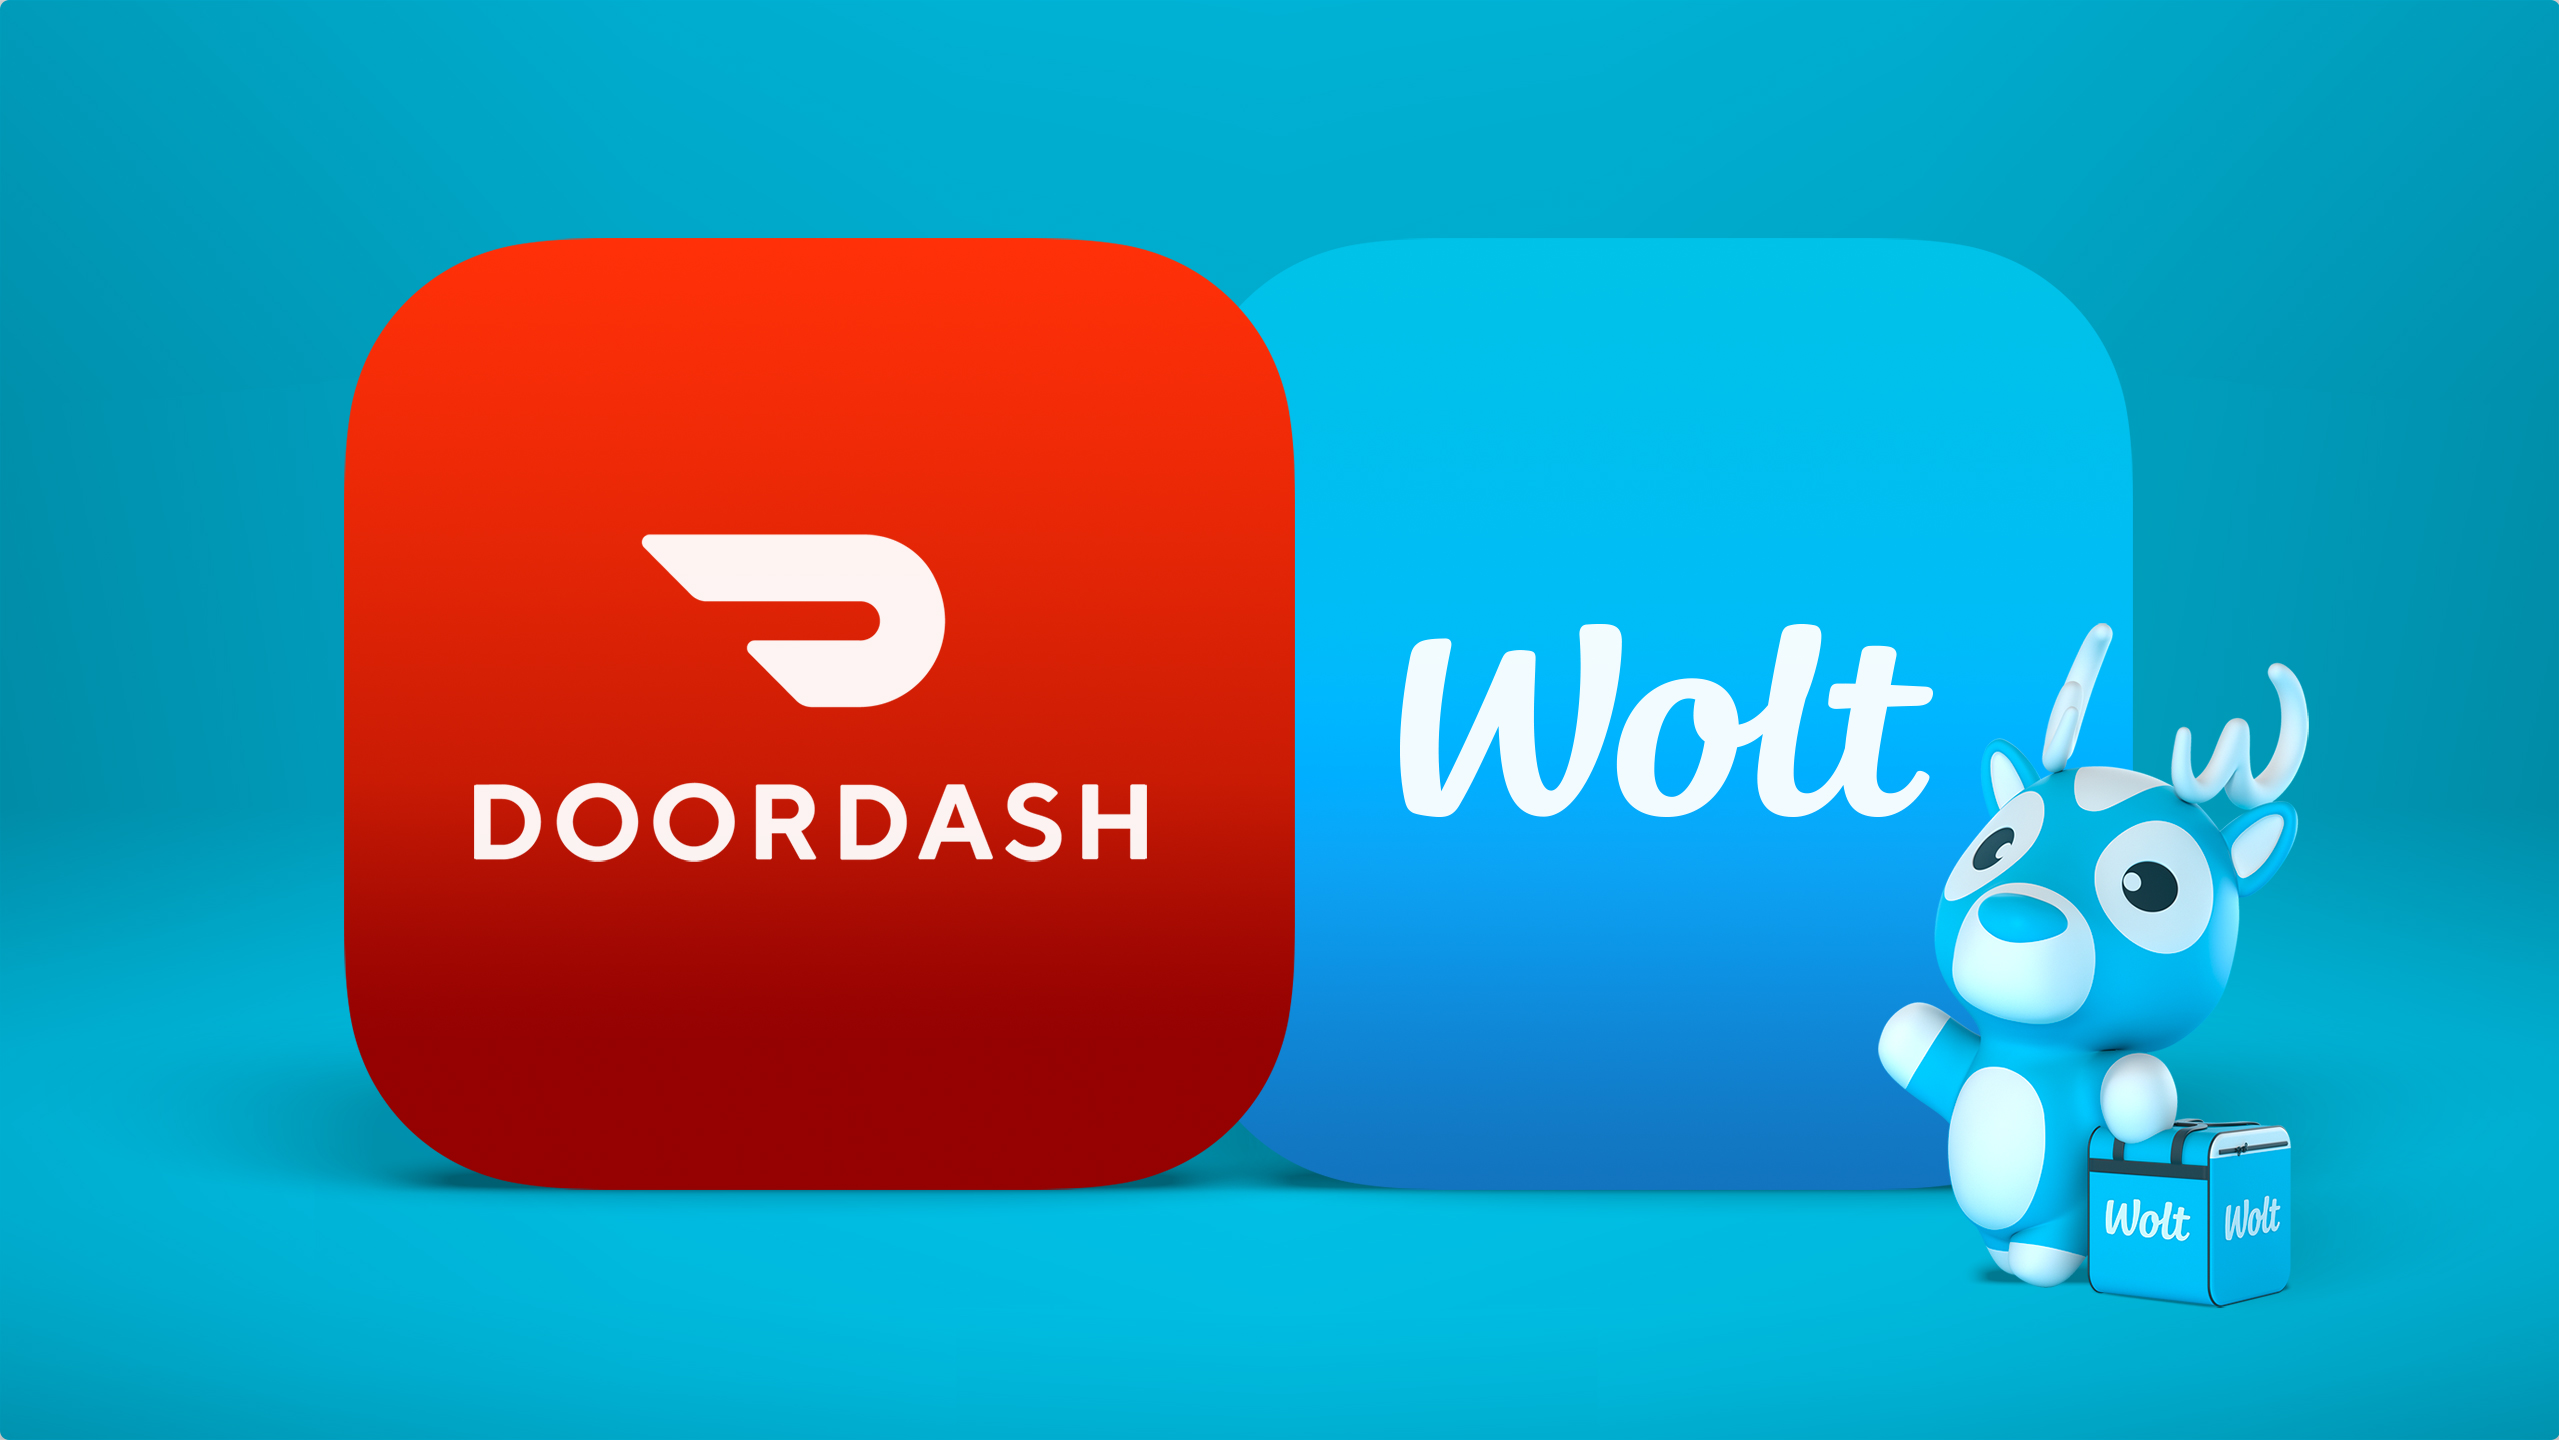 DoorDash to Acquire Wolt for $8 Billion - Food On Demand